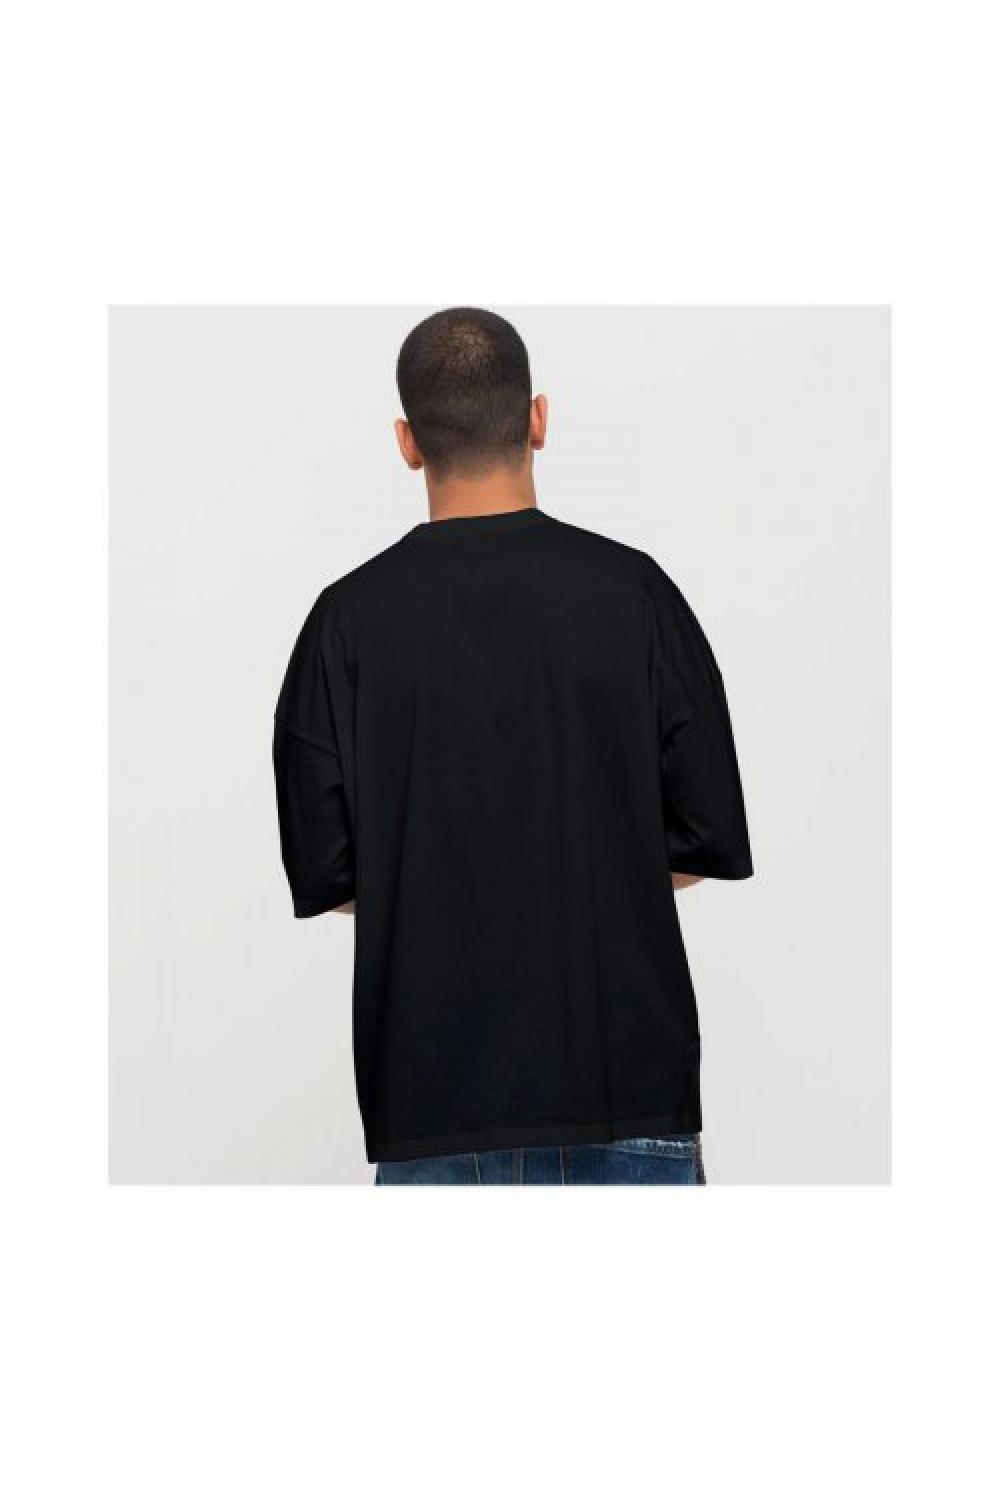 STAFF T-shirt Soul Men - Black (64-044.047-N0090)